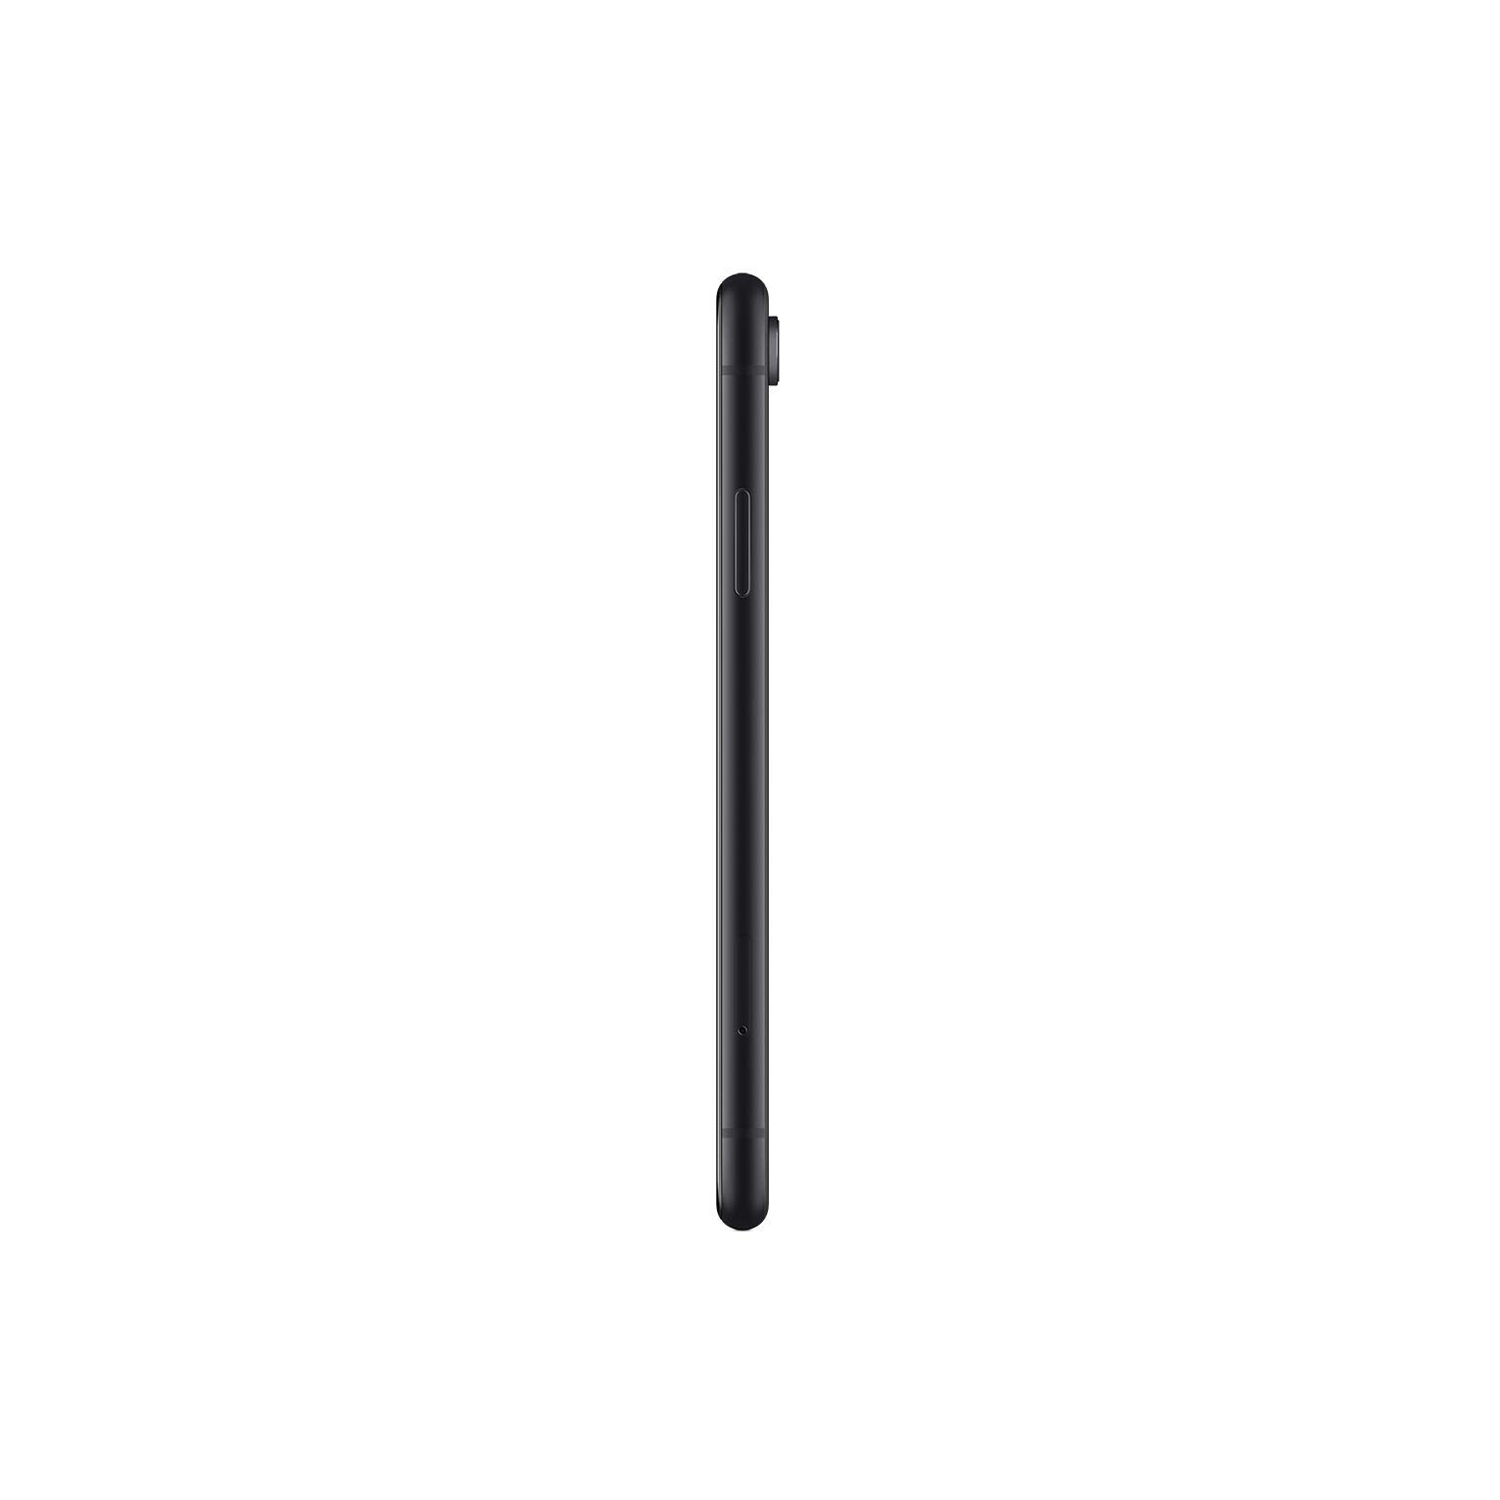 Apple iPhone XR 64GB Unlocked - Black | Best Buy Canada